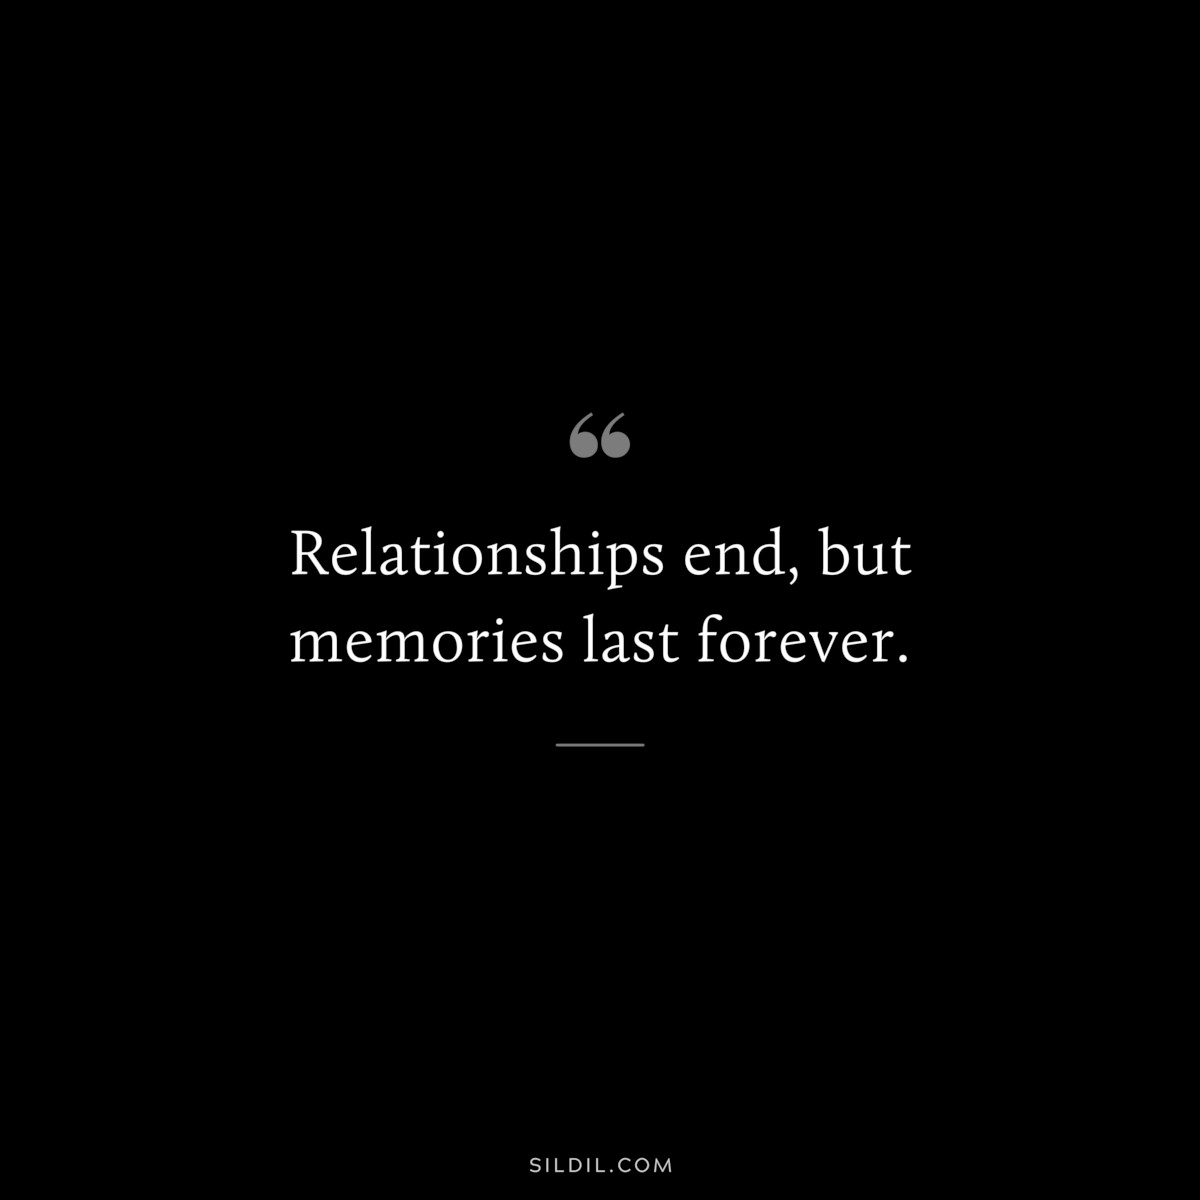 Relationships end, but memories last forever.